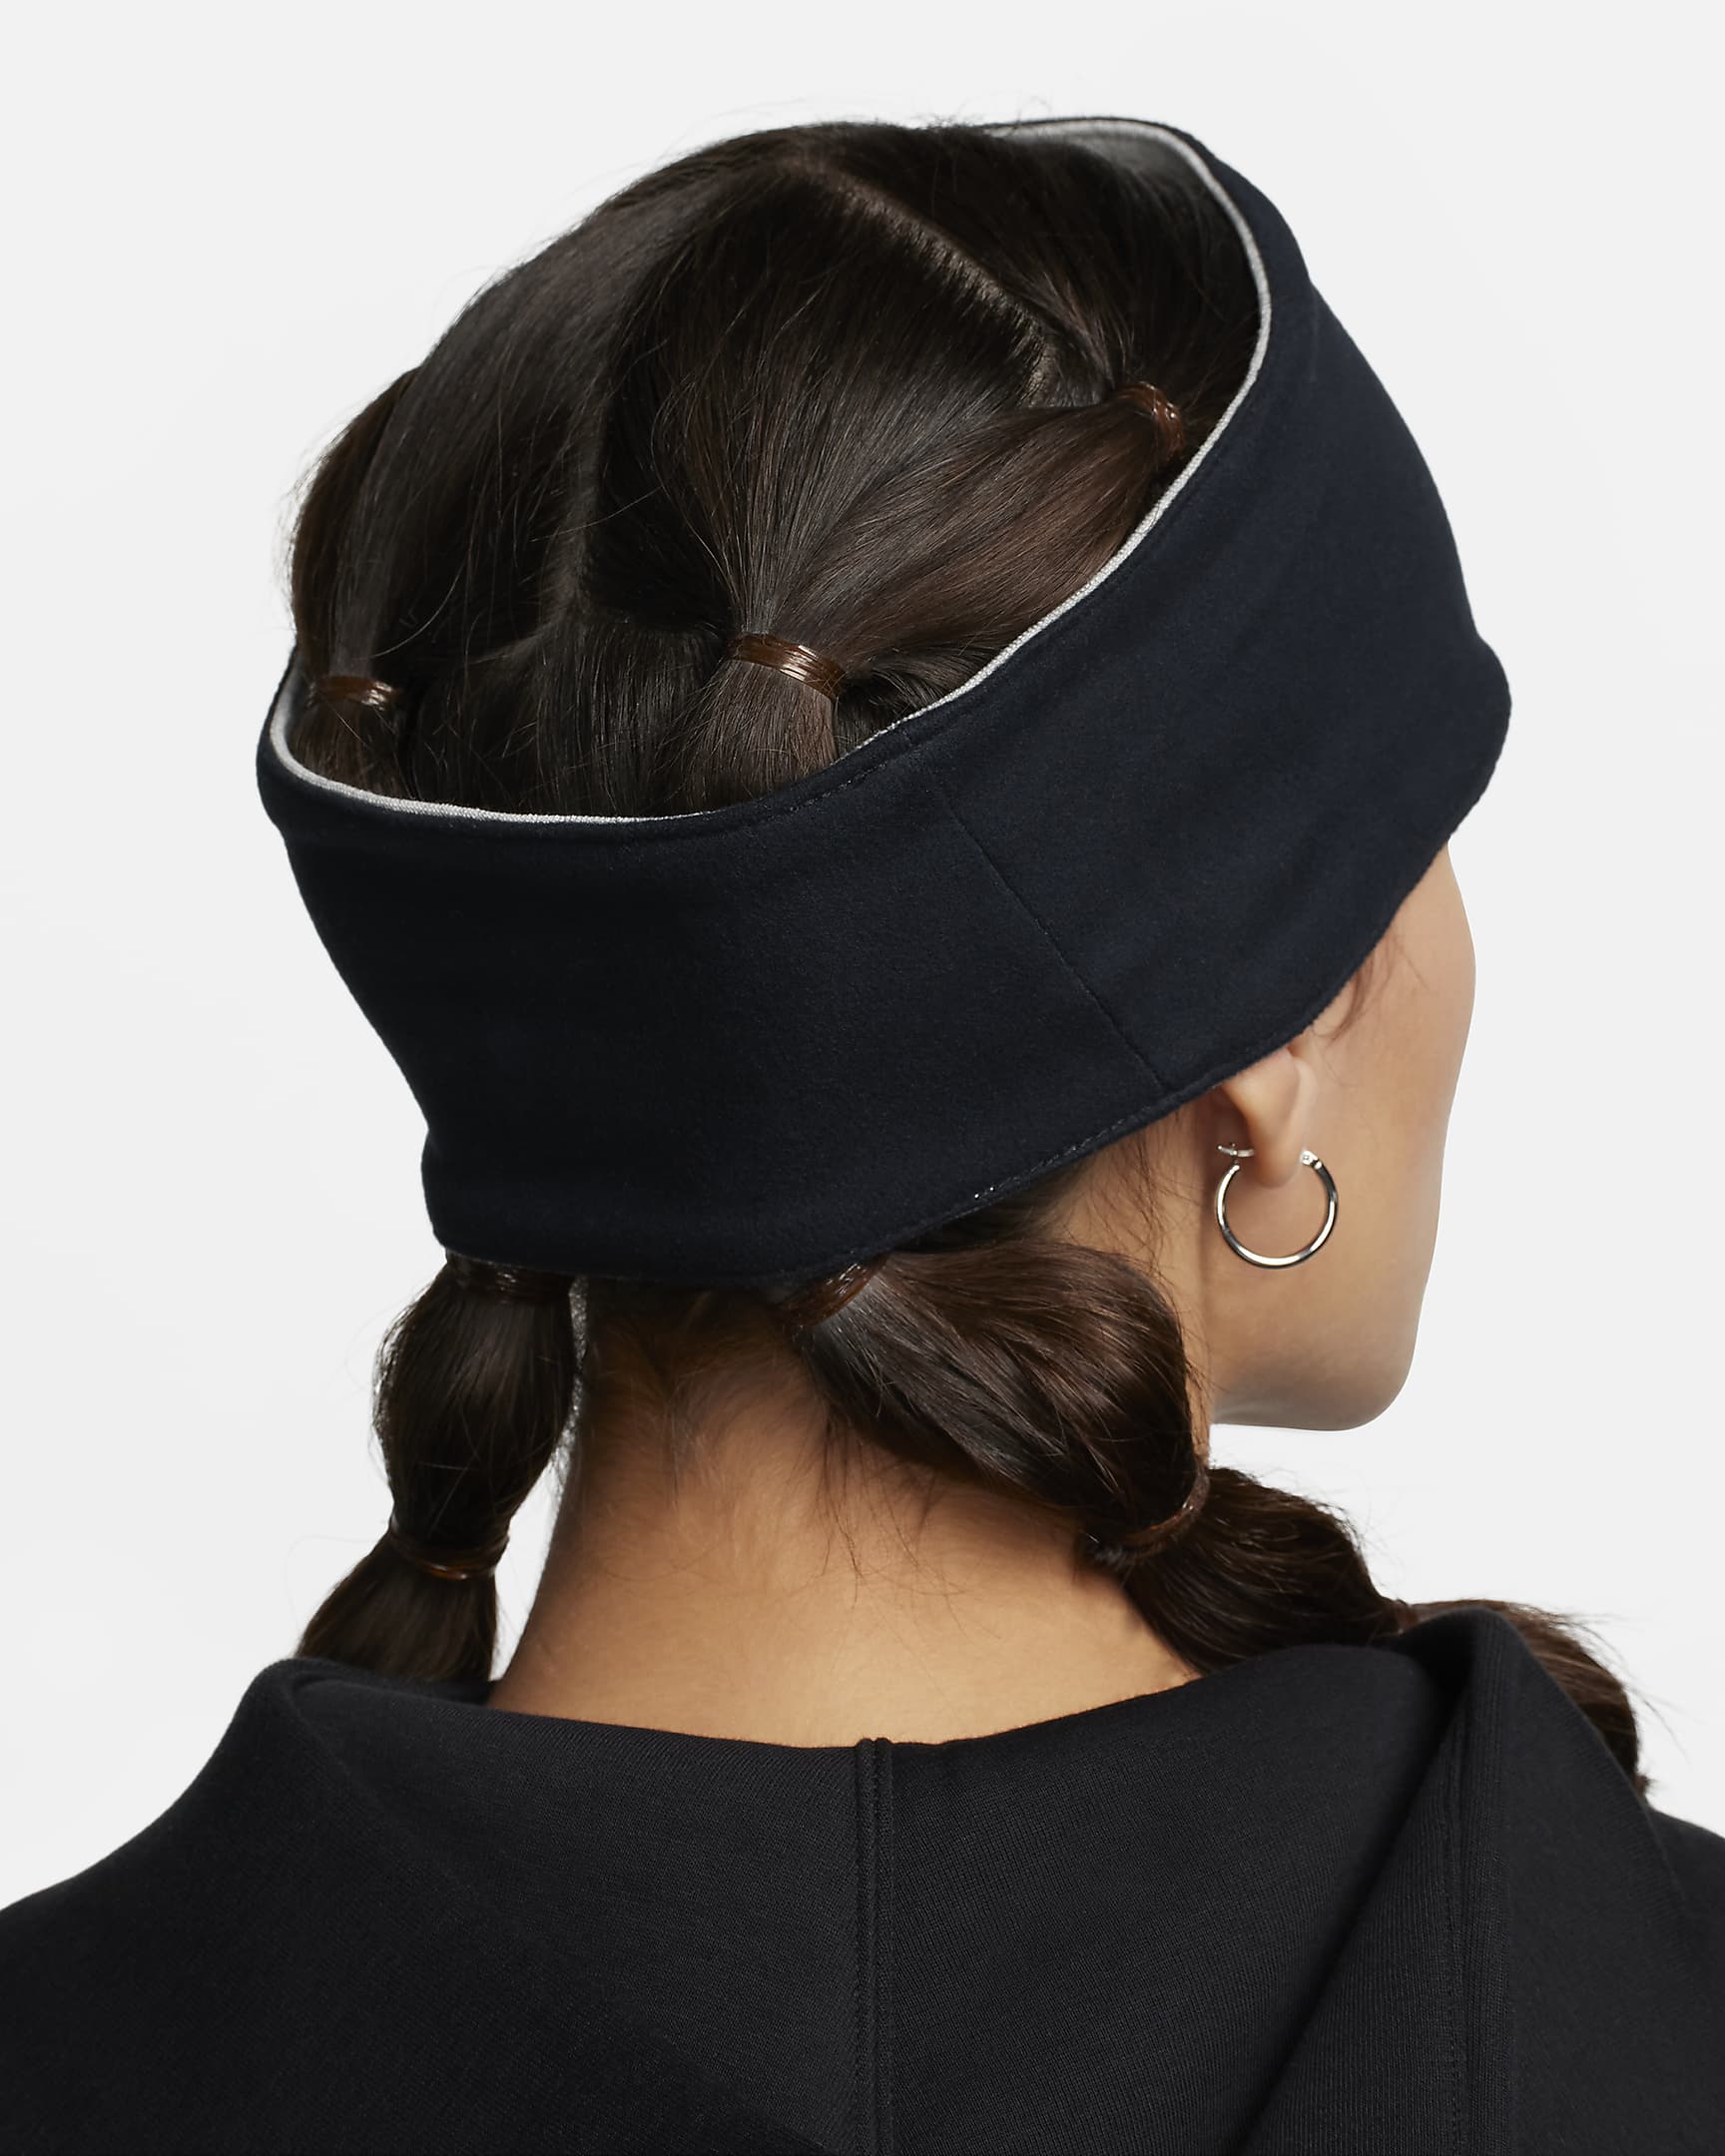 Nike Therma-FIT Tech Fleece Headband - Black